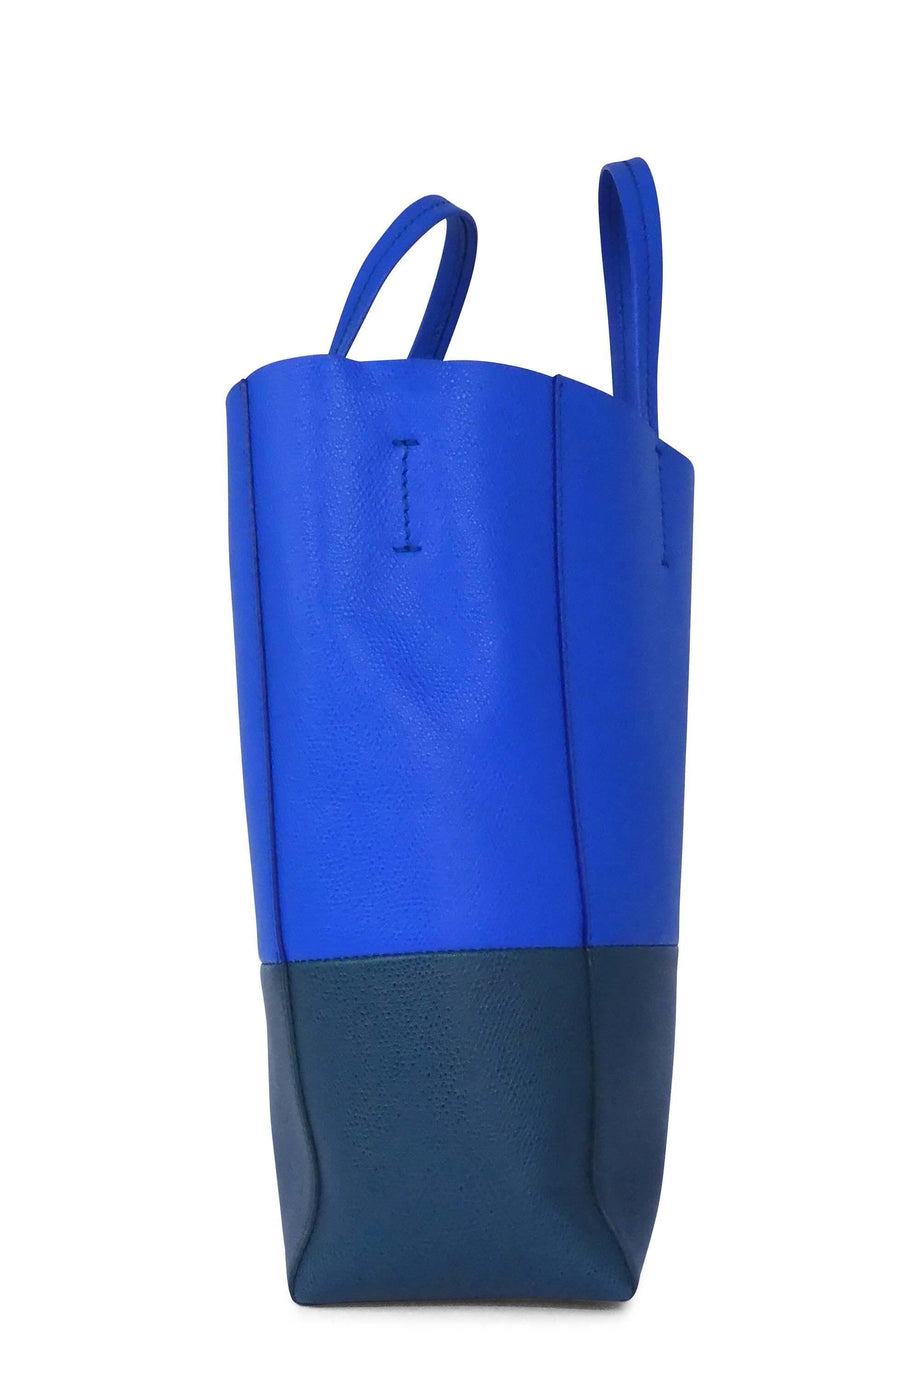 Céline Pre-Owned Vertical Cabas Tote Bag - Farfetch